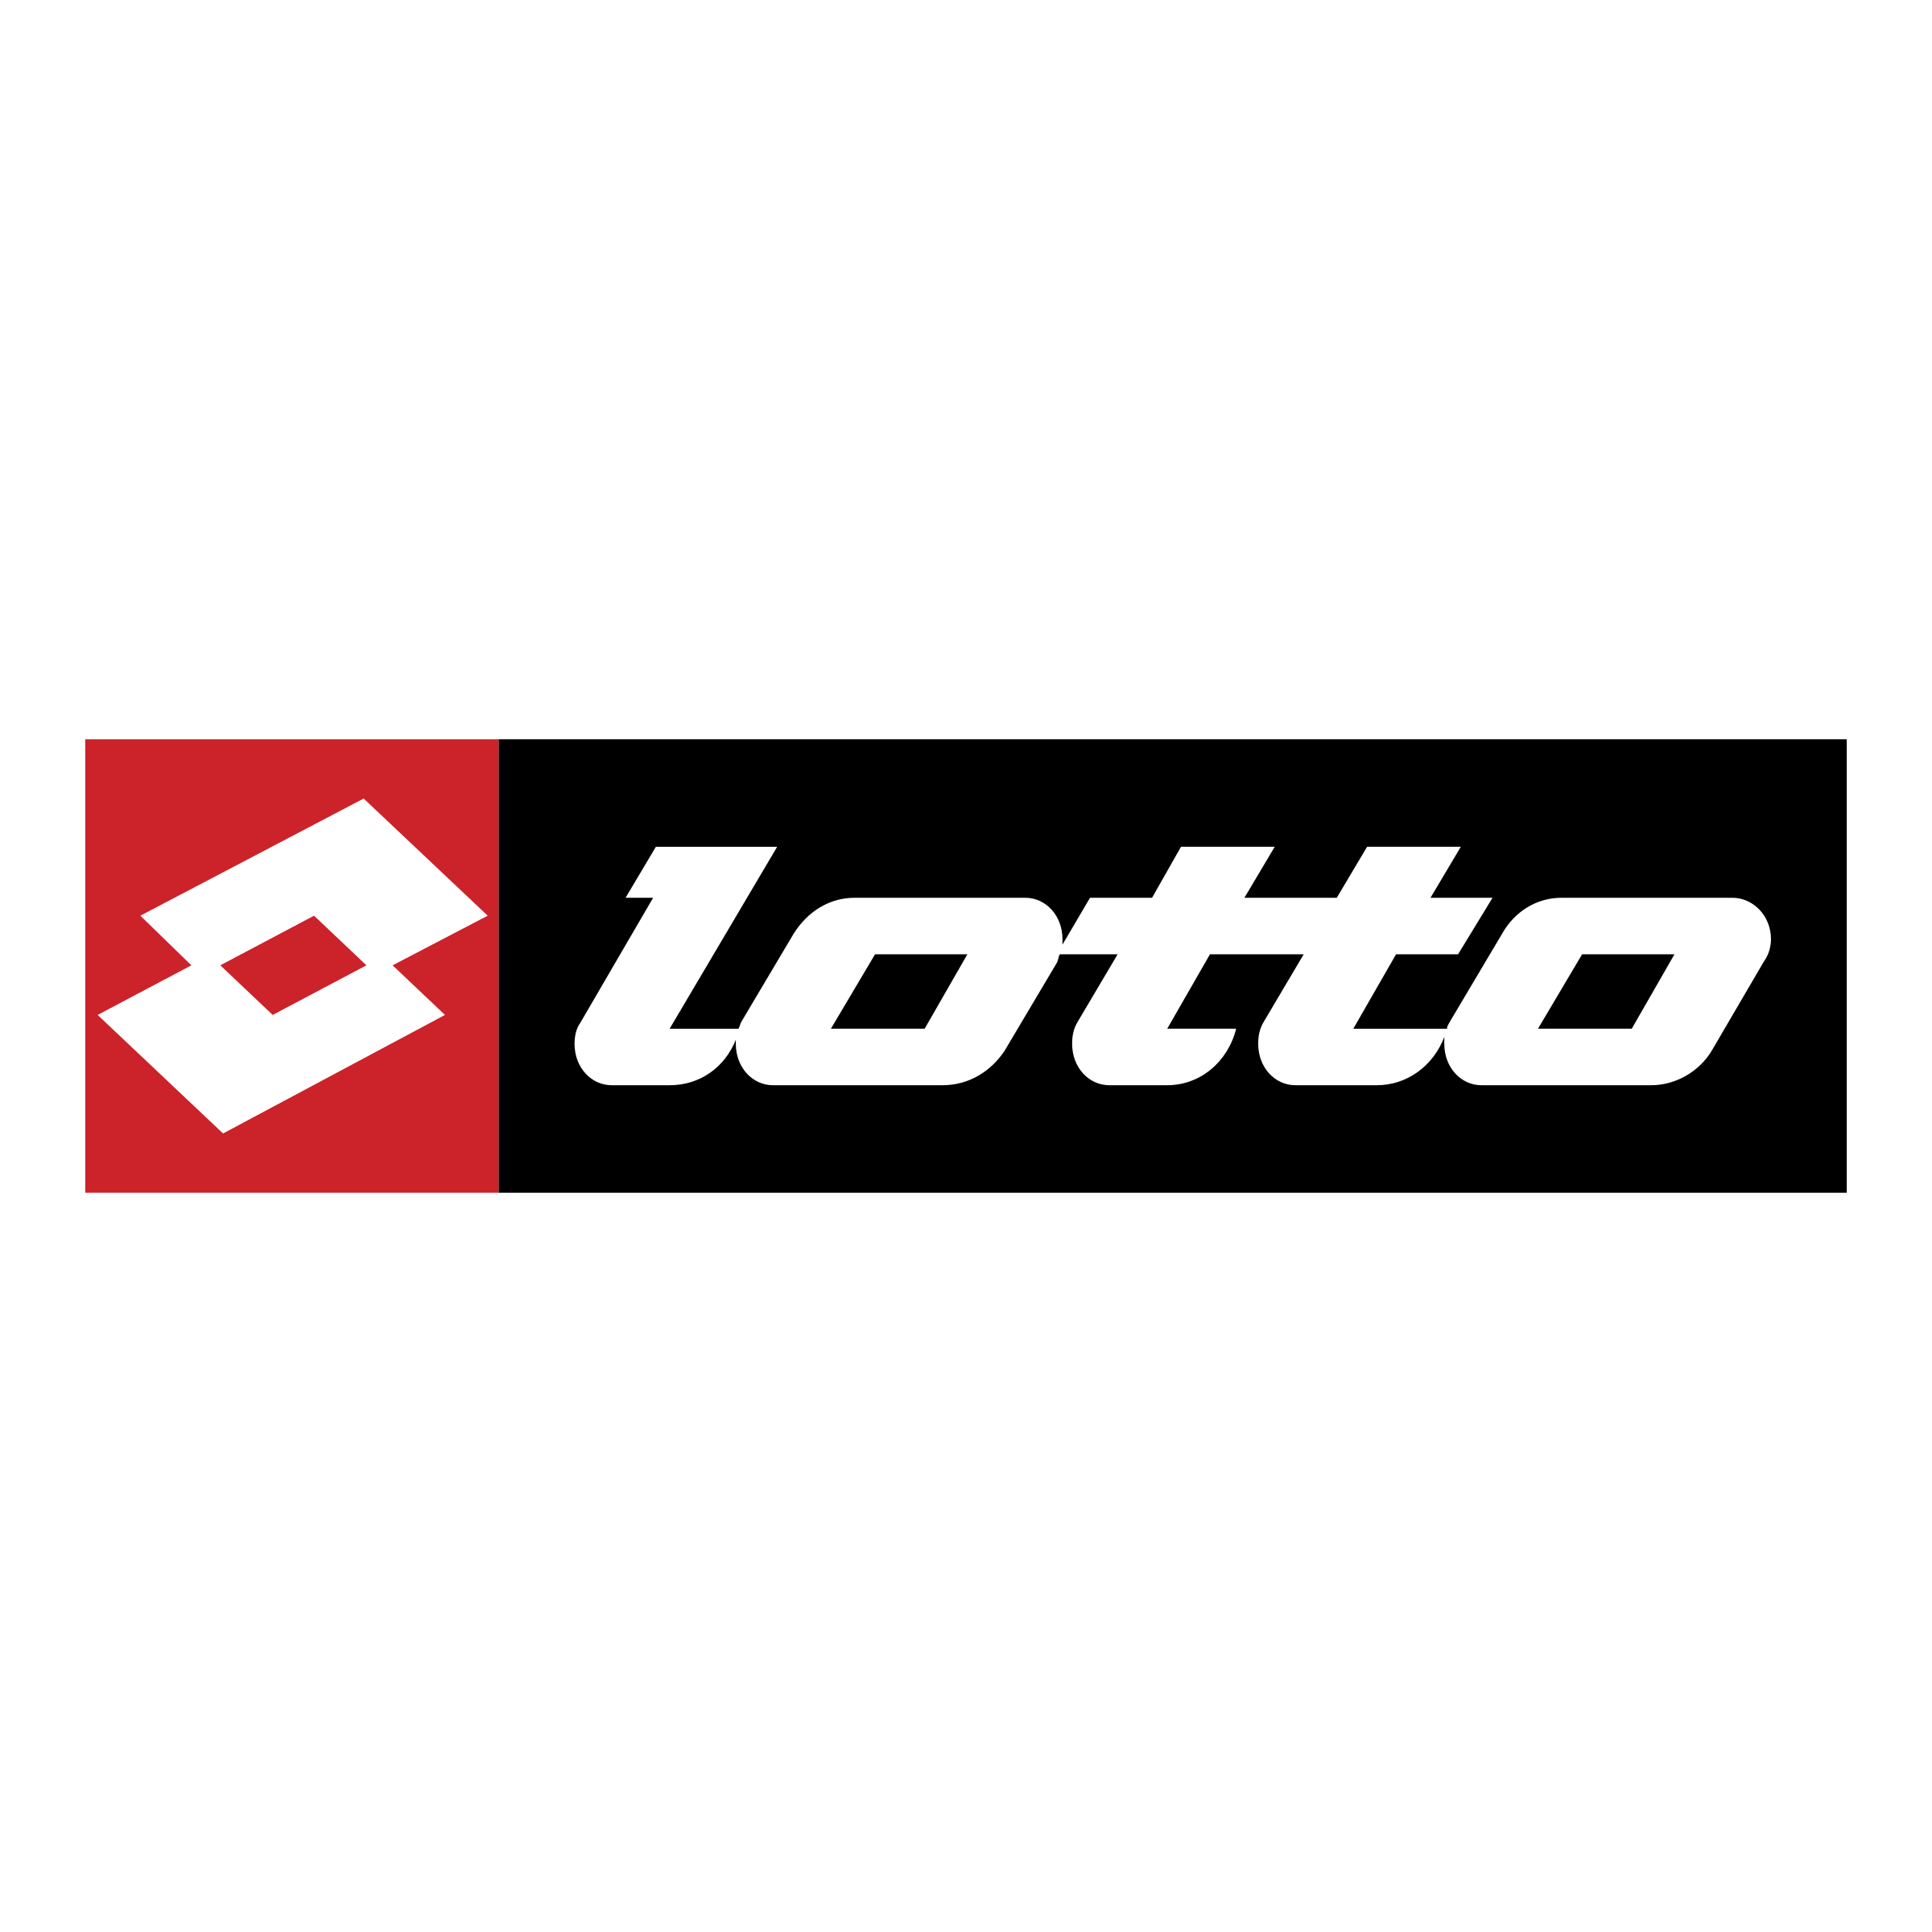 Lotto Logo - Lotto Logo PNG Transparent & SVG Vector - Freebie Supply